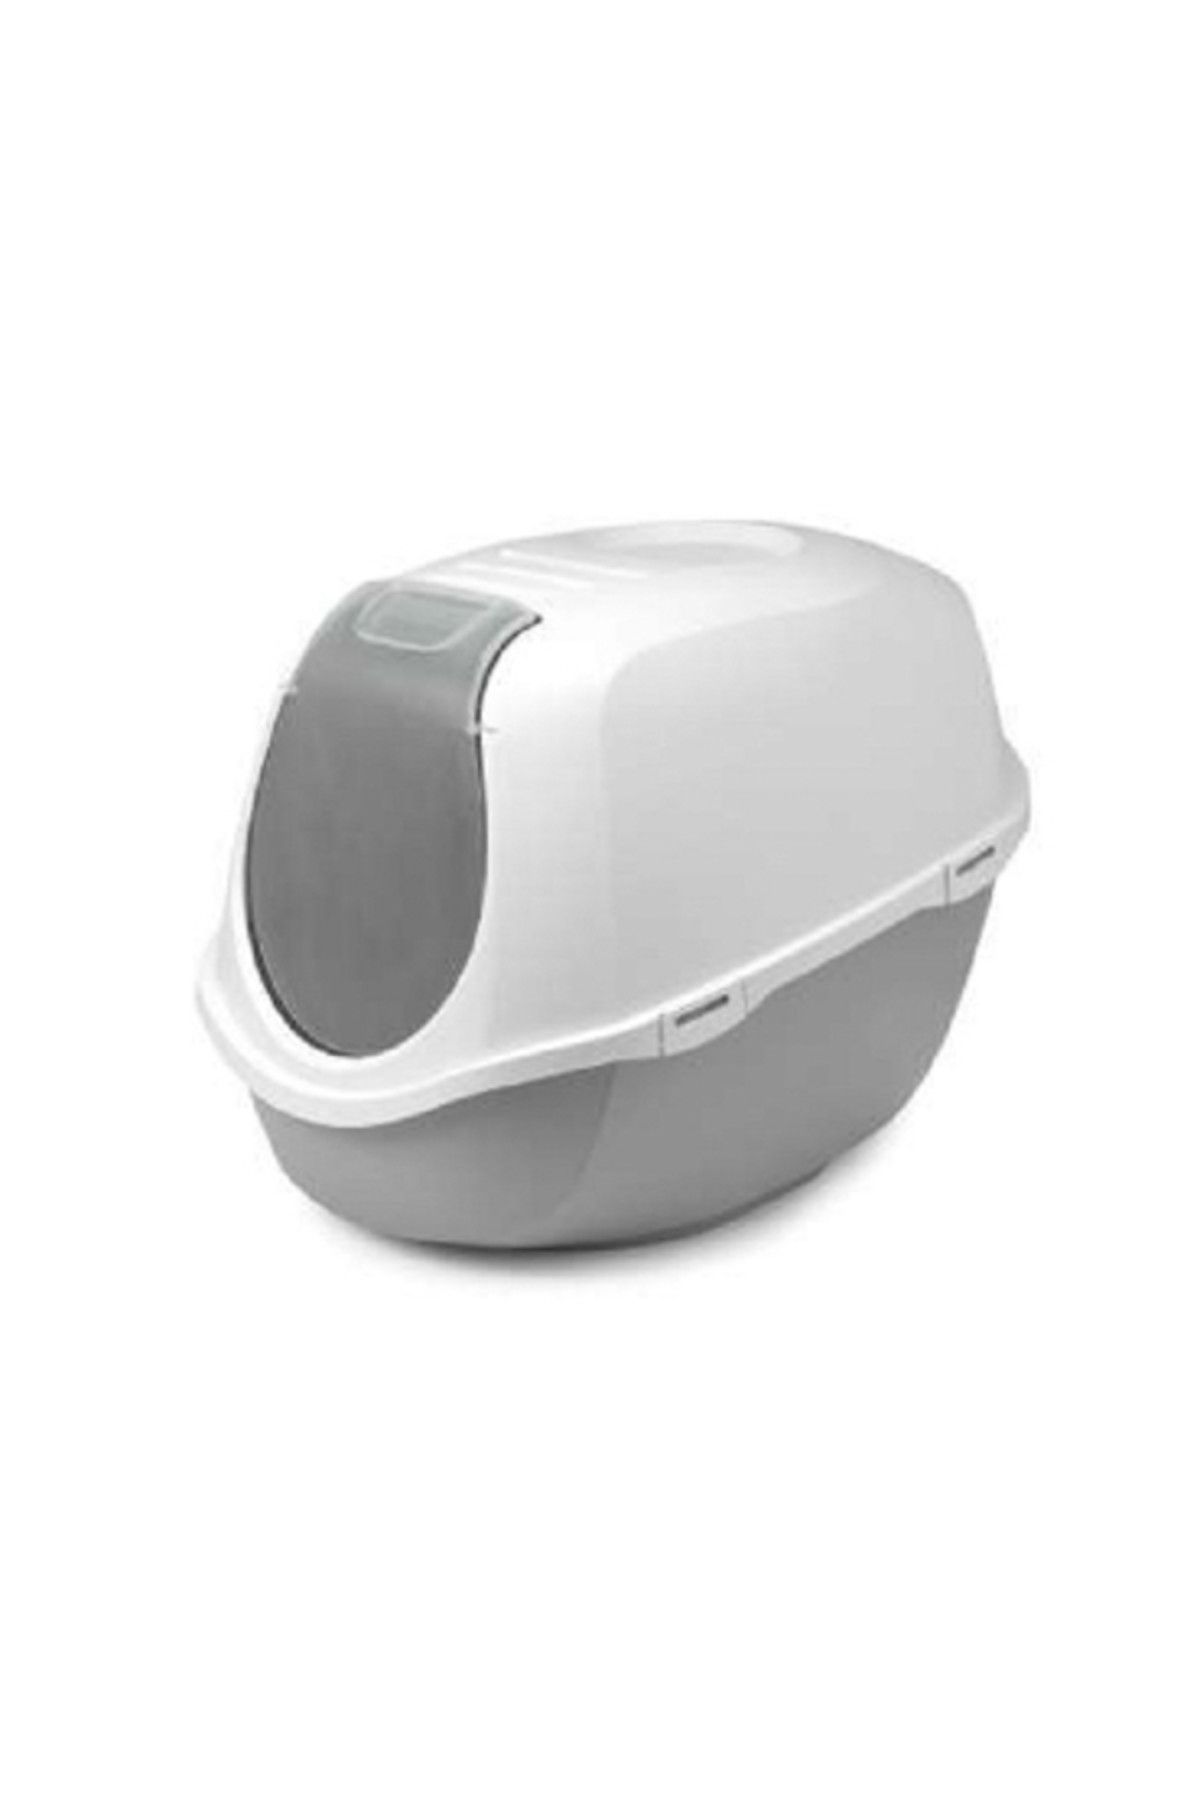 Moderna Mega Smart Kedi Tuvalet Kabı 46 cm x 55 cm x 49 cm Gri